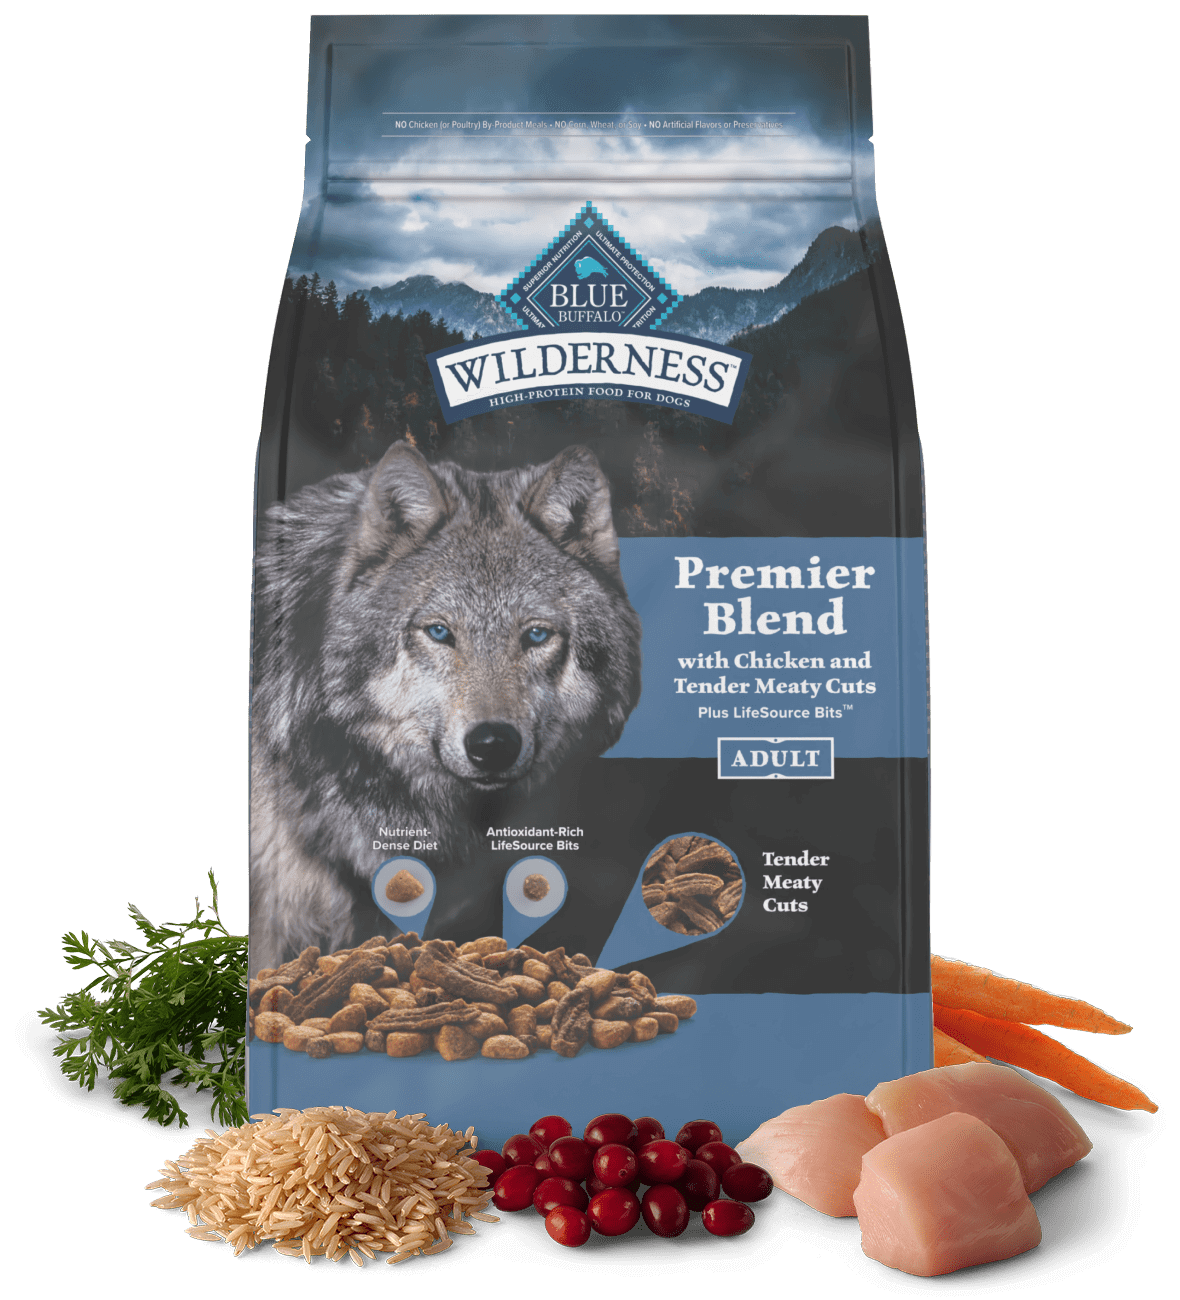 Wilderness dog food